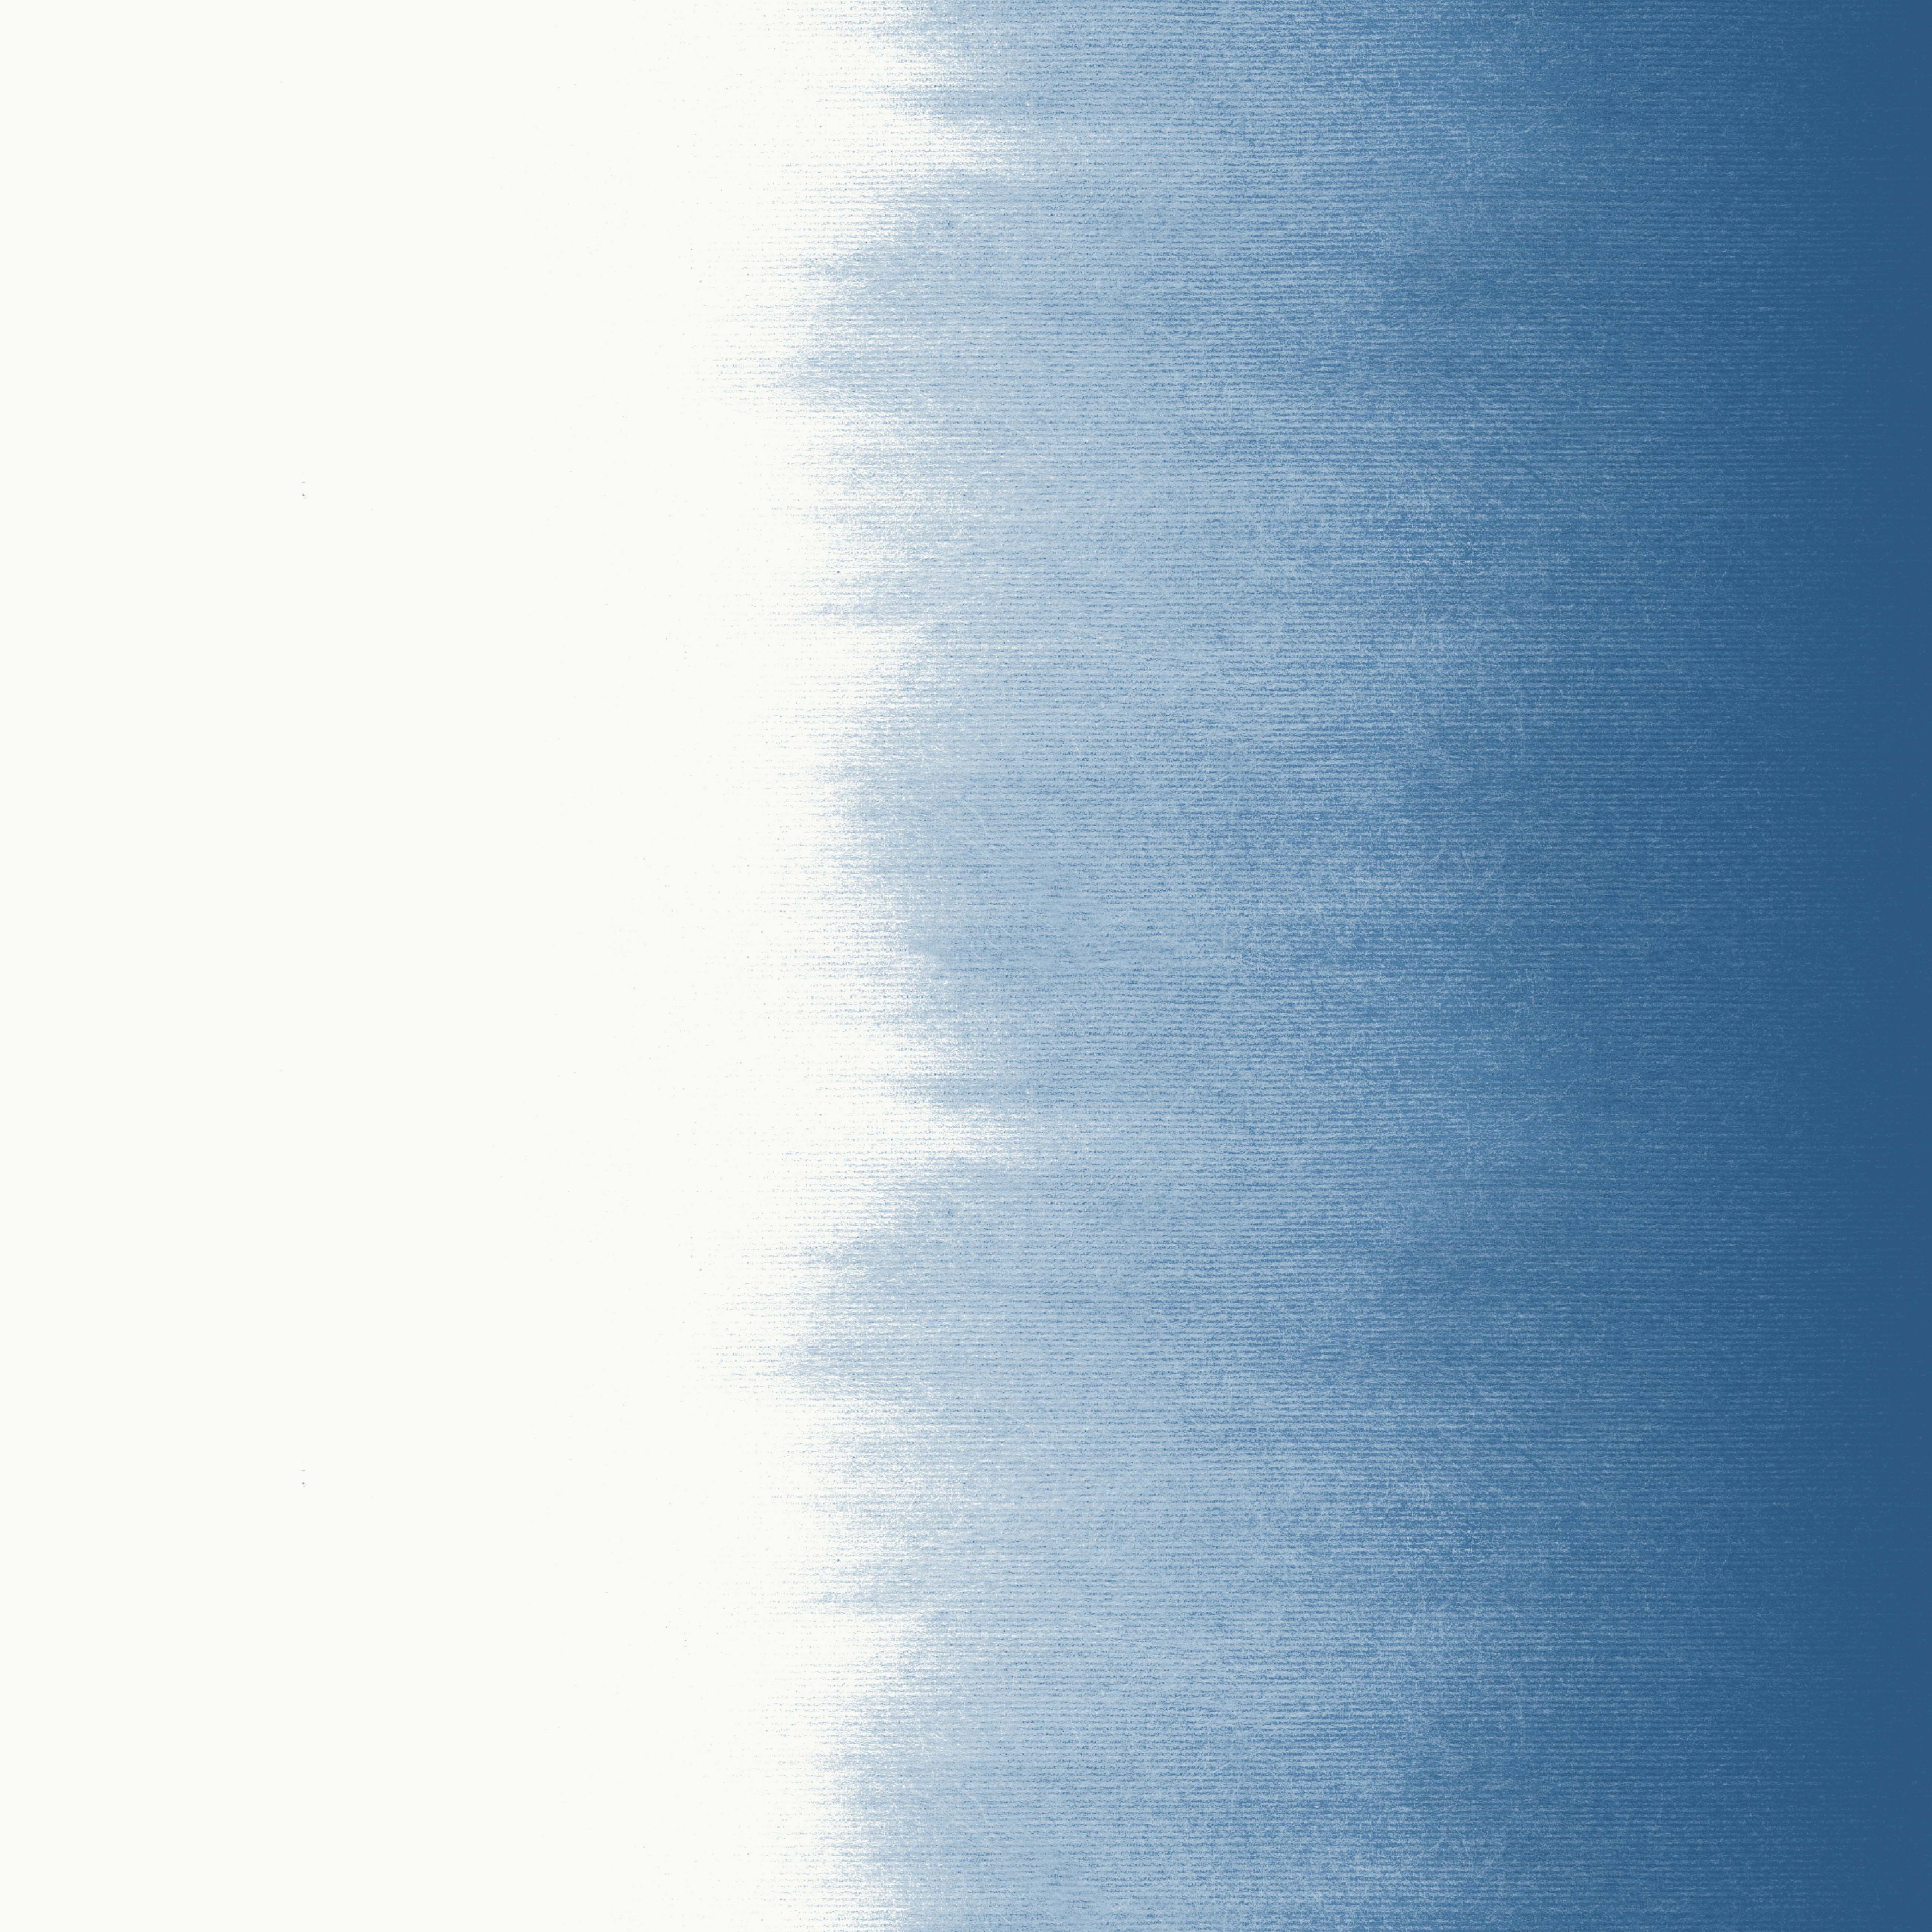 blau weiße tapete,blau,weiß,himmel,tagsüber,atmosphäre